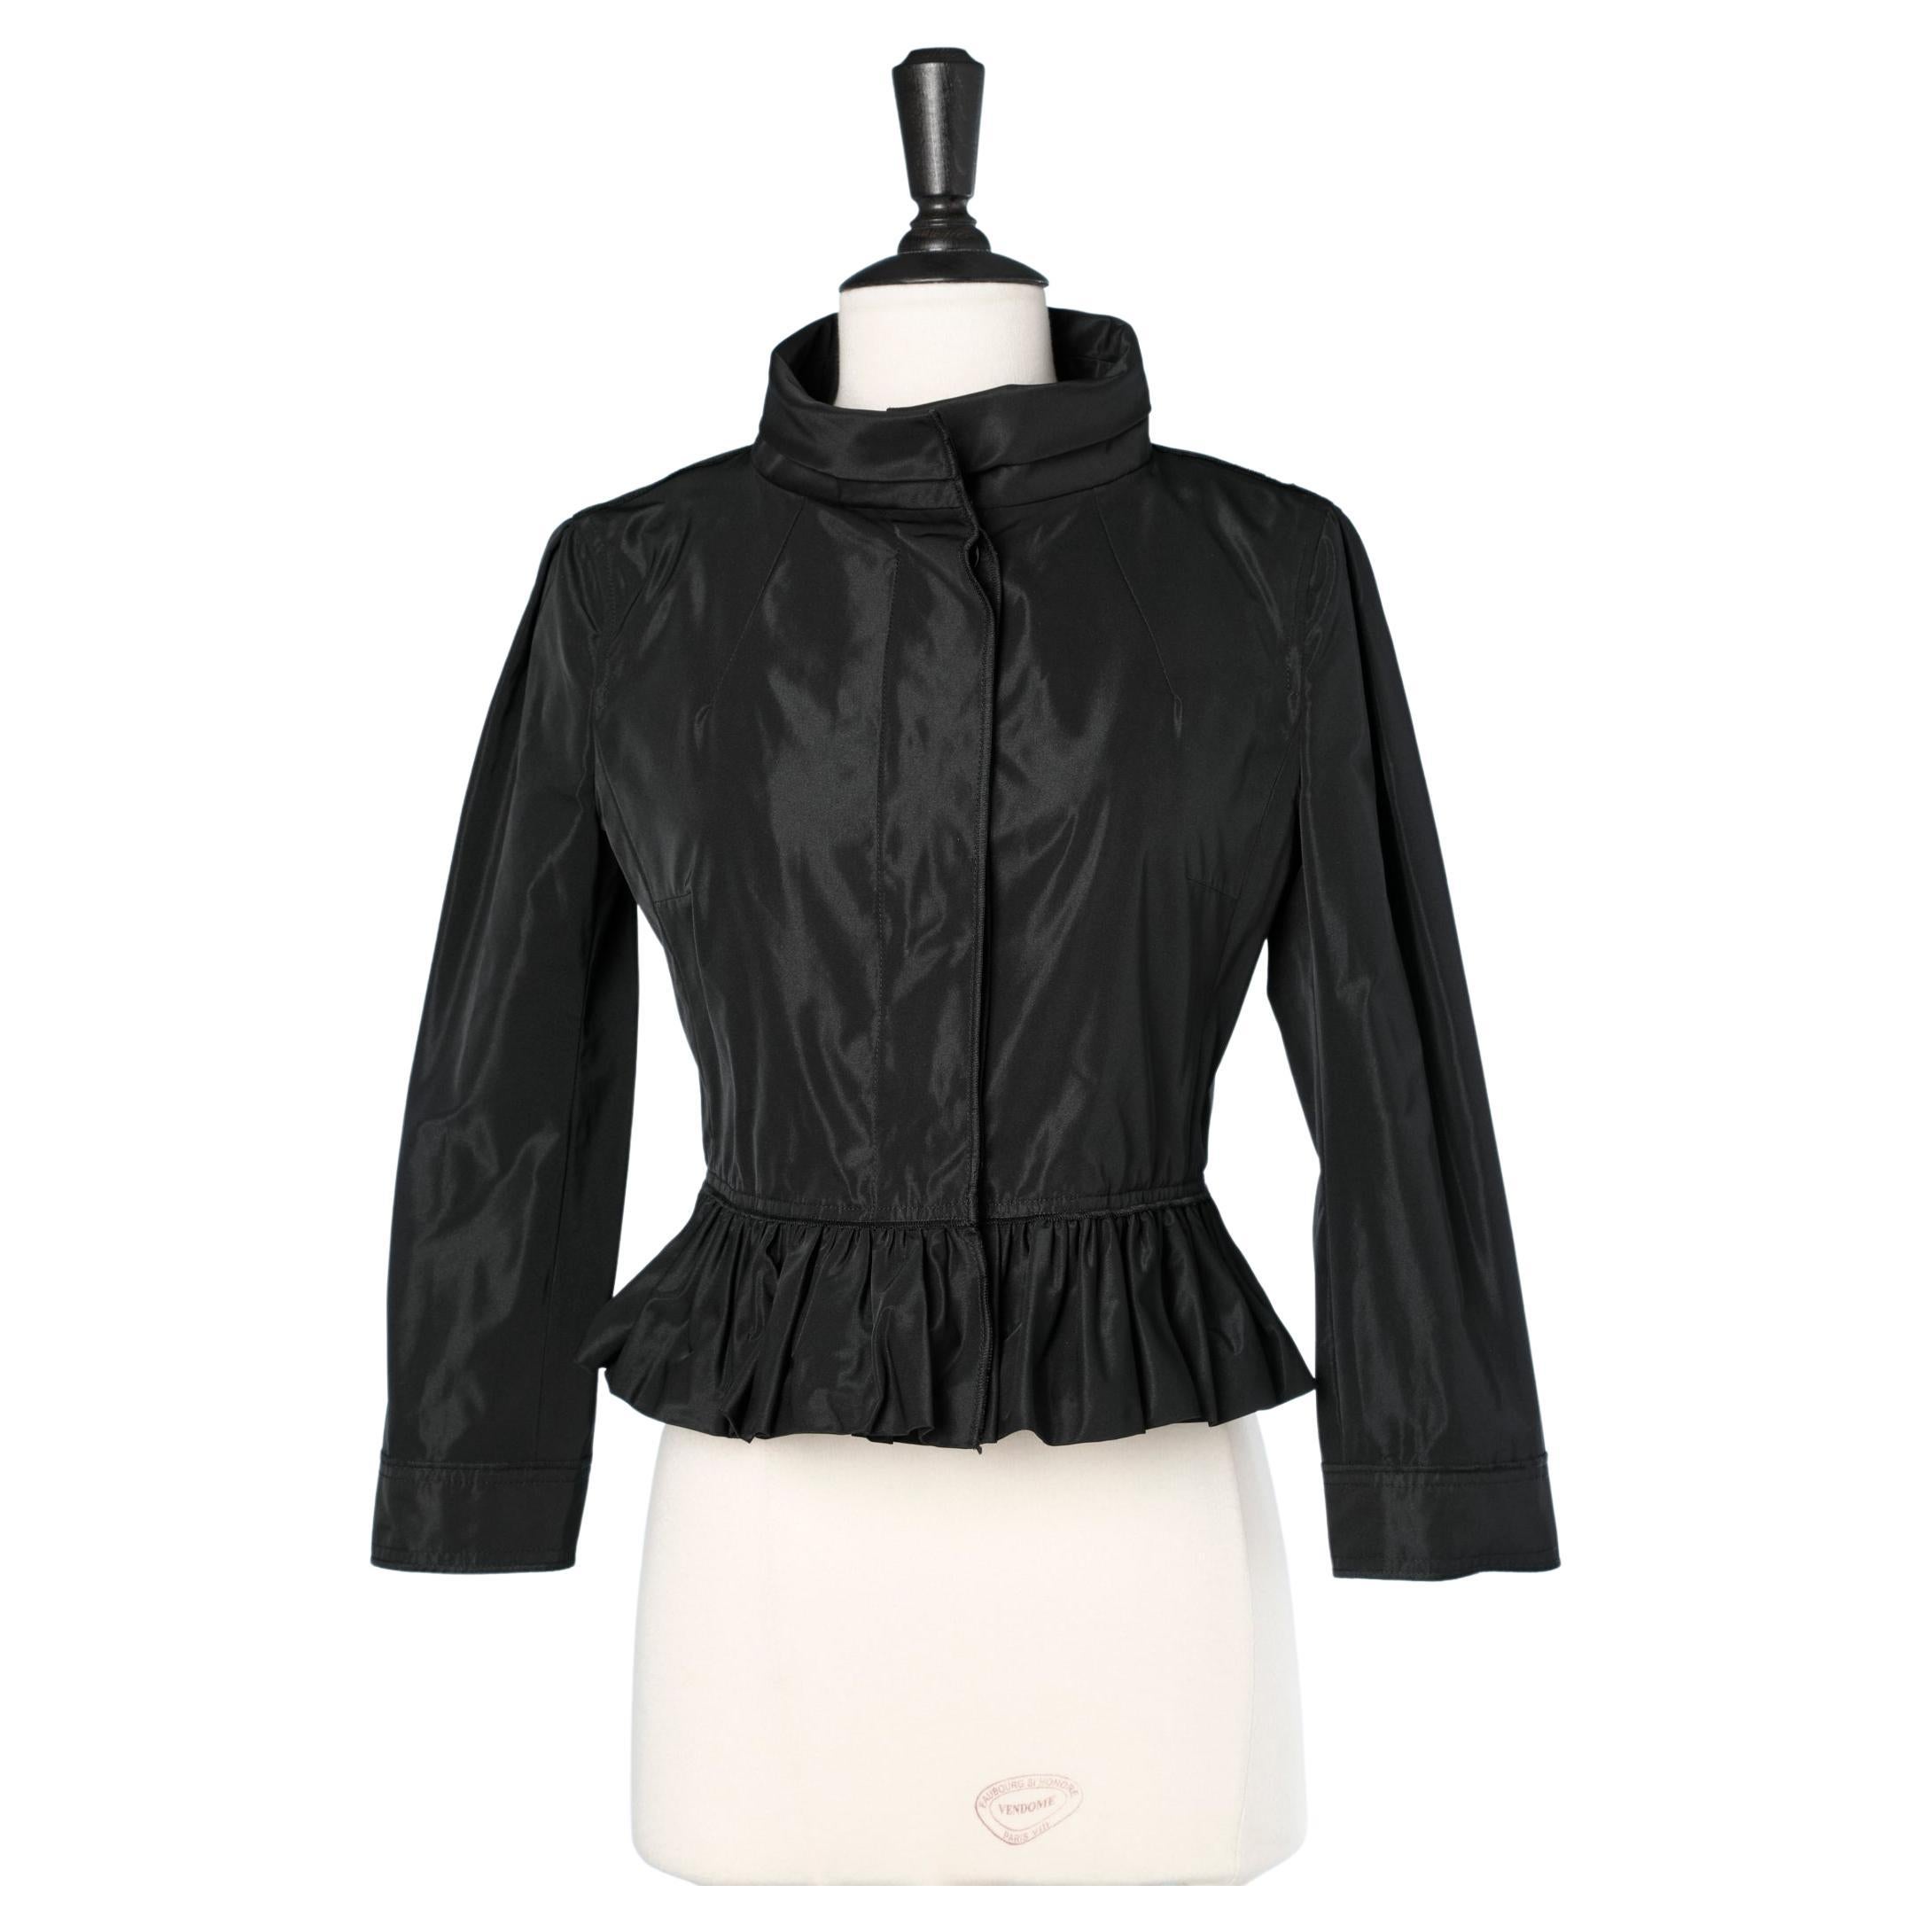 Black taffeta jacket with ruffles Dolce & Gabbana 